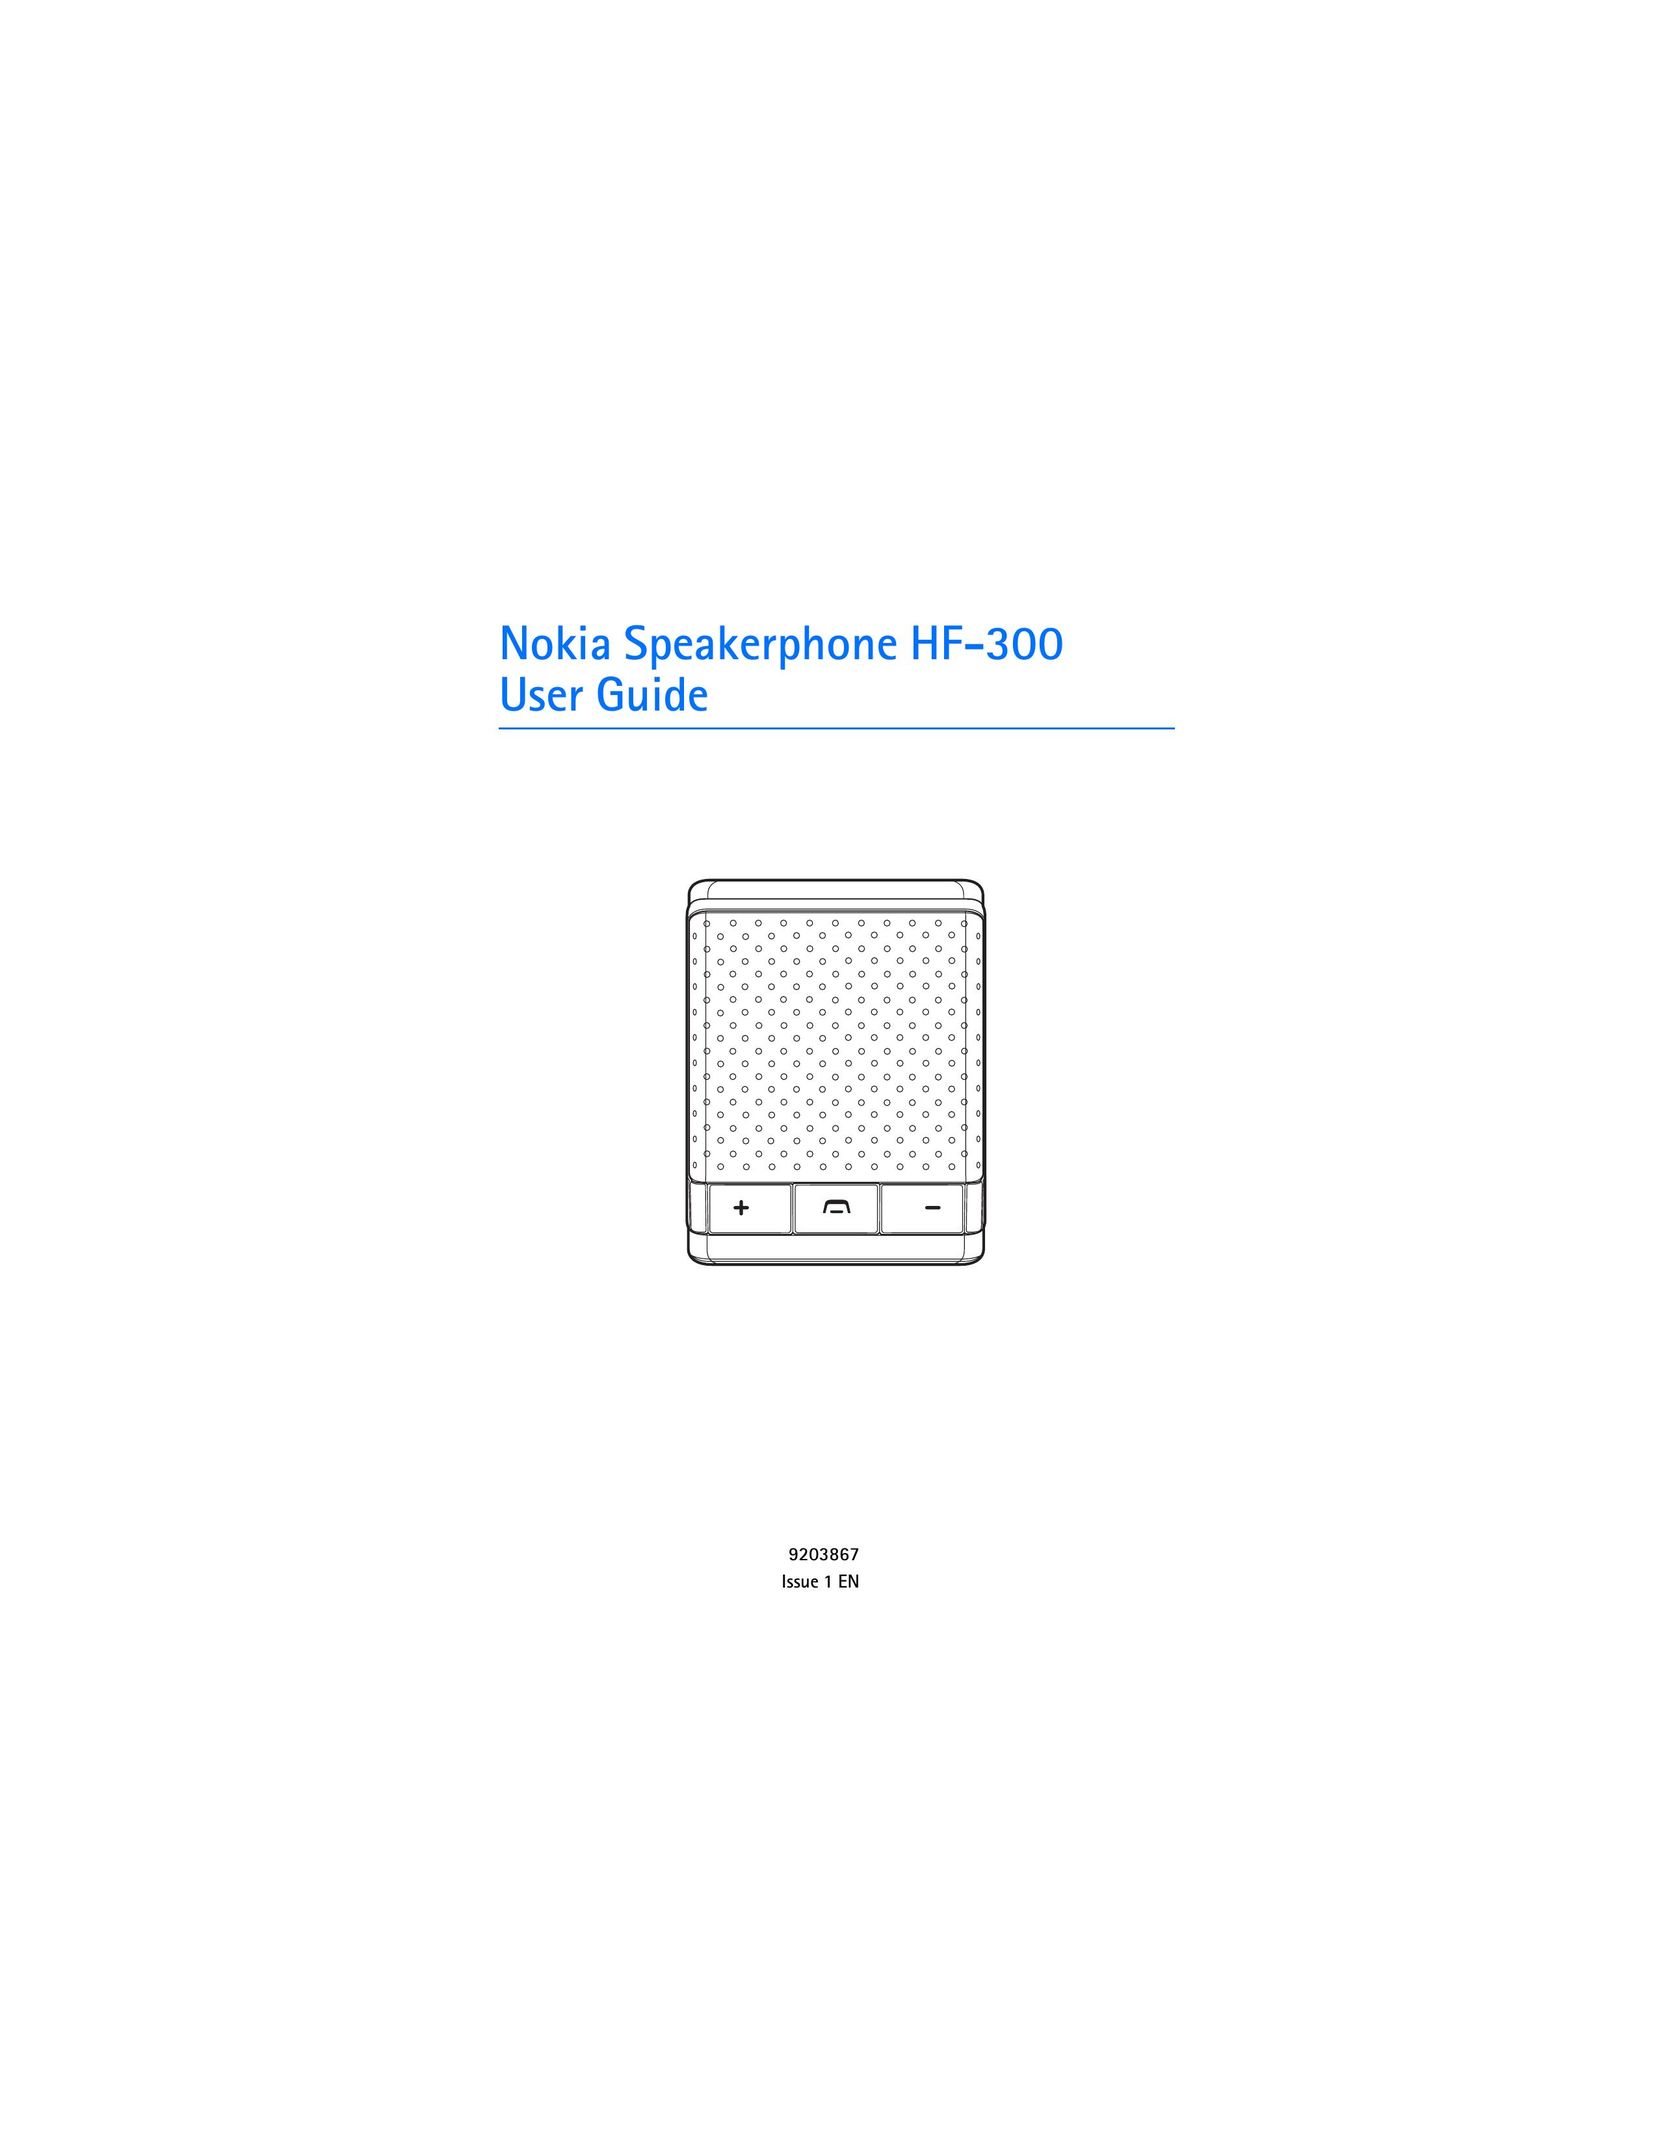 Nokia HF-300 Telephone User Manual